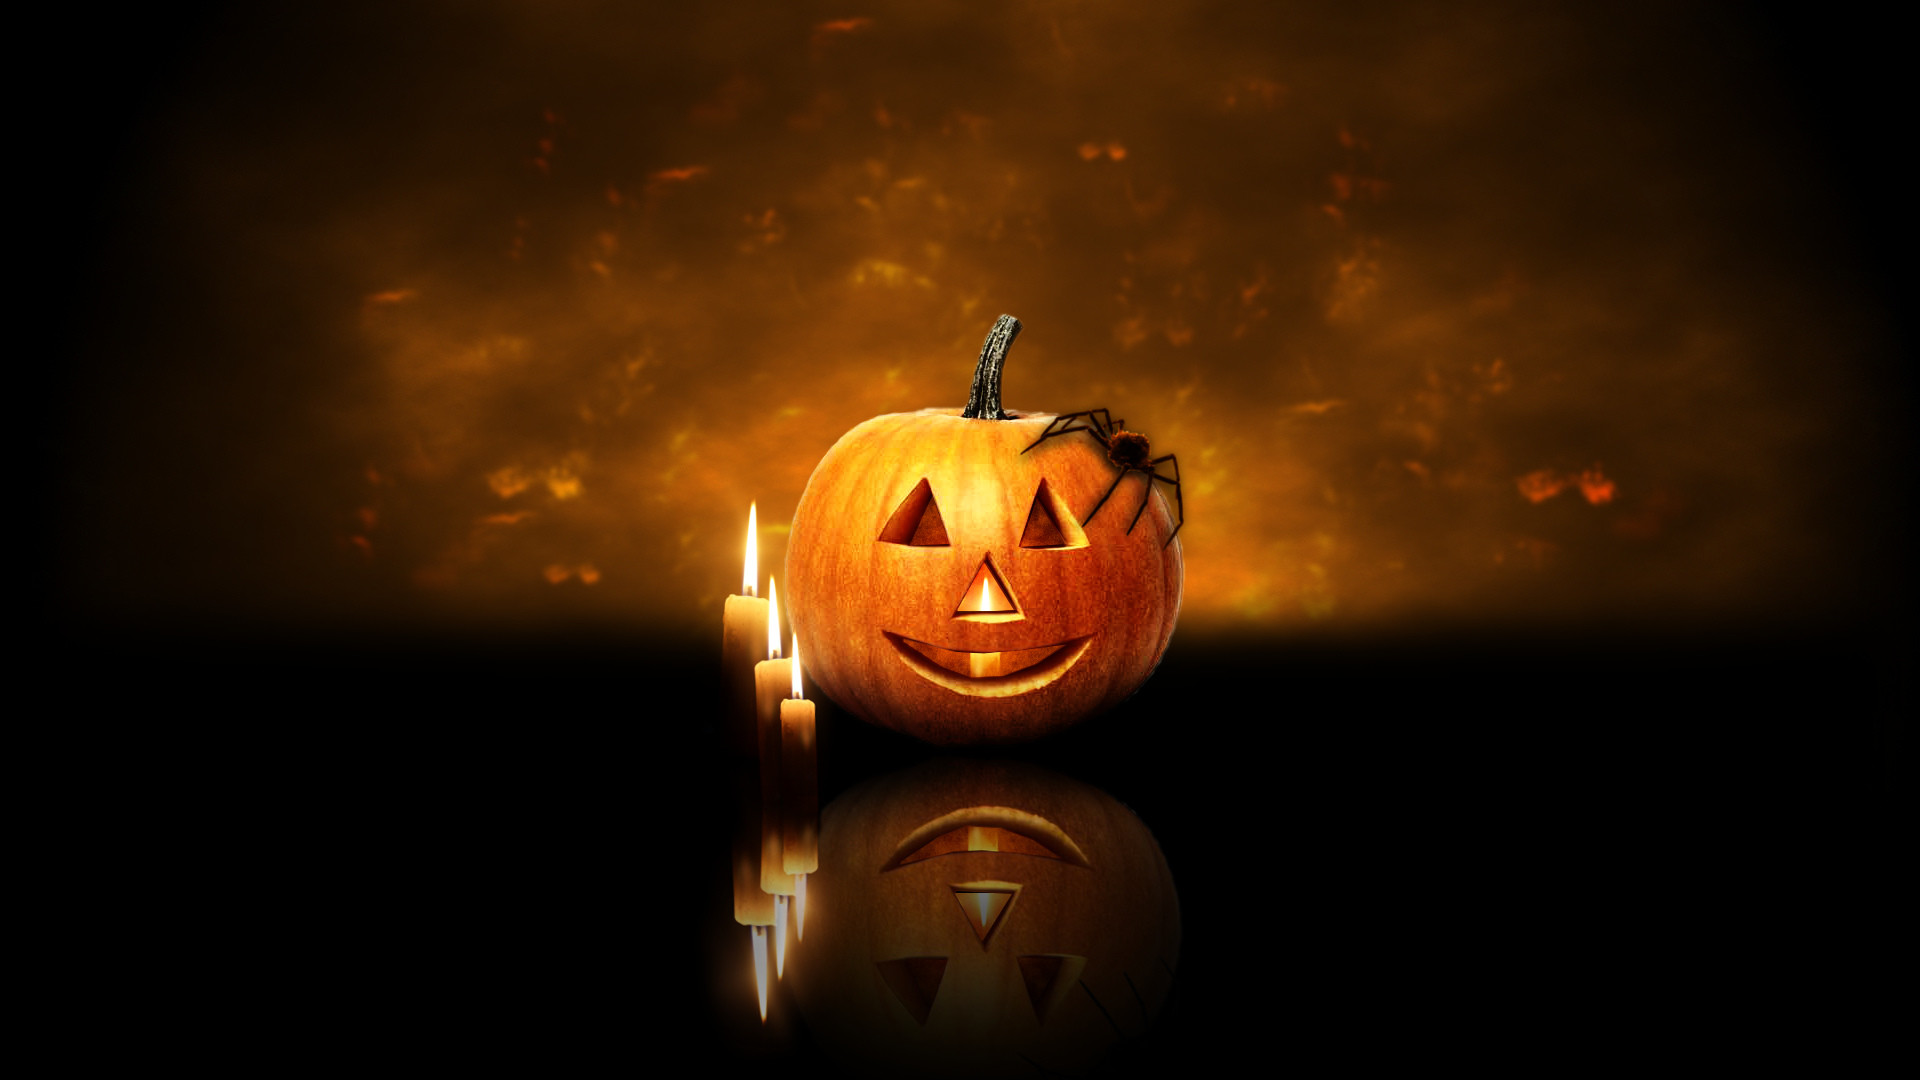 1920x1080 Halloween Backgrounds Free Download | PixelsTalk.Net. Halloween Backgrounds  Free Download PixelsTalk Net